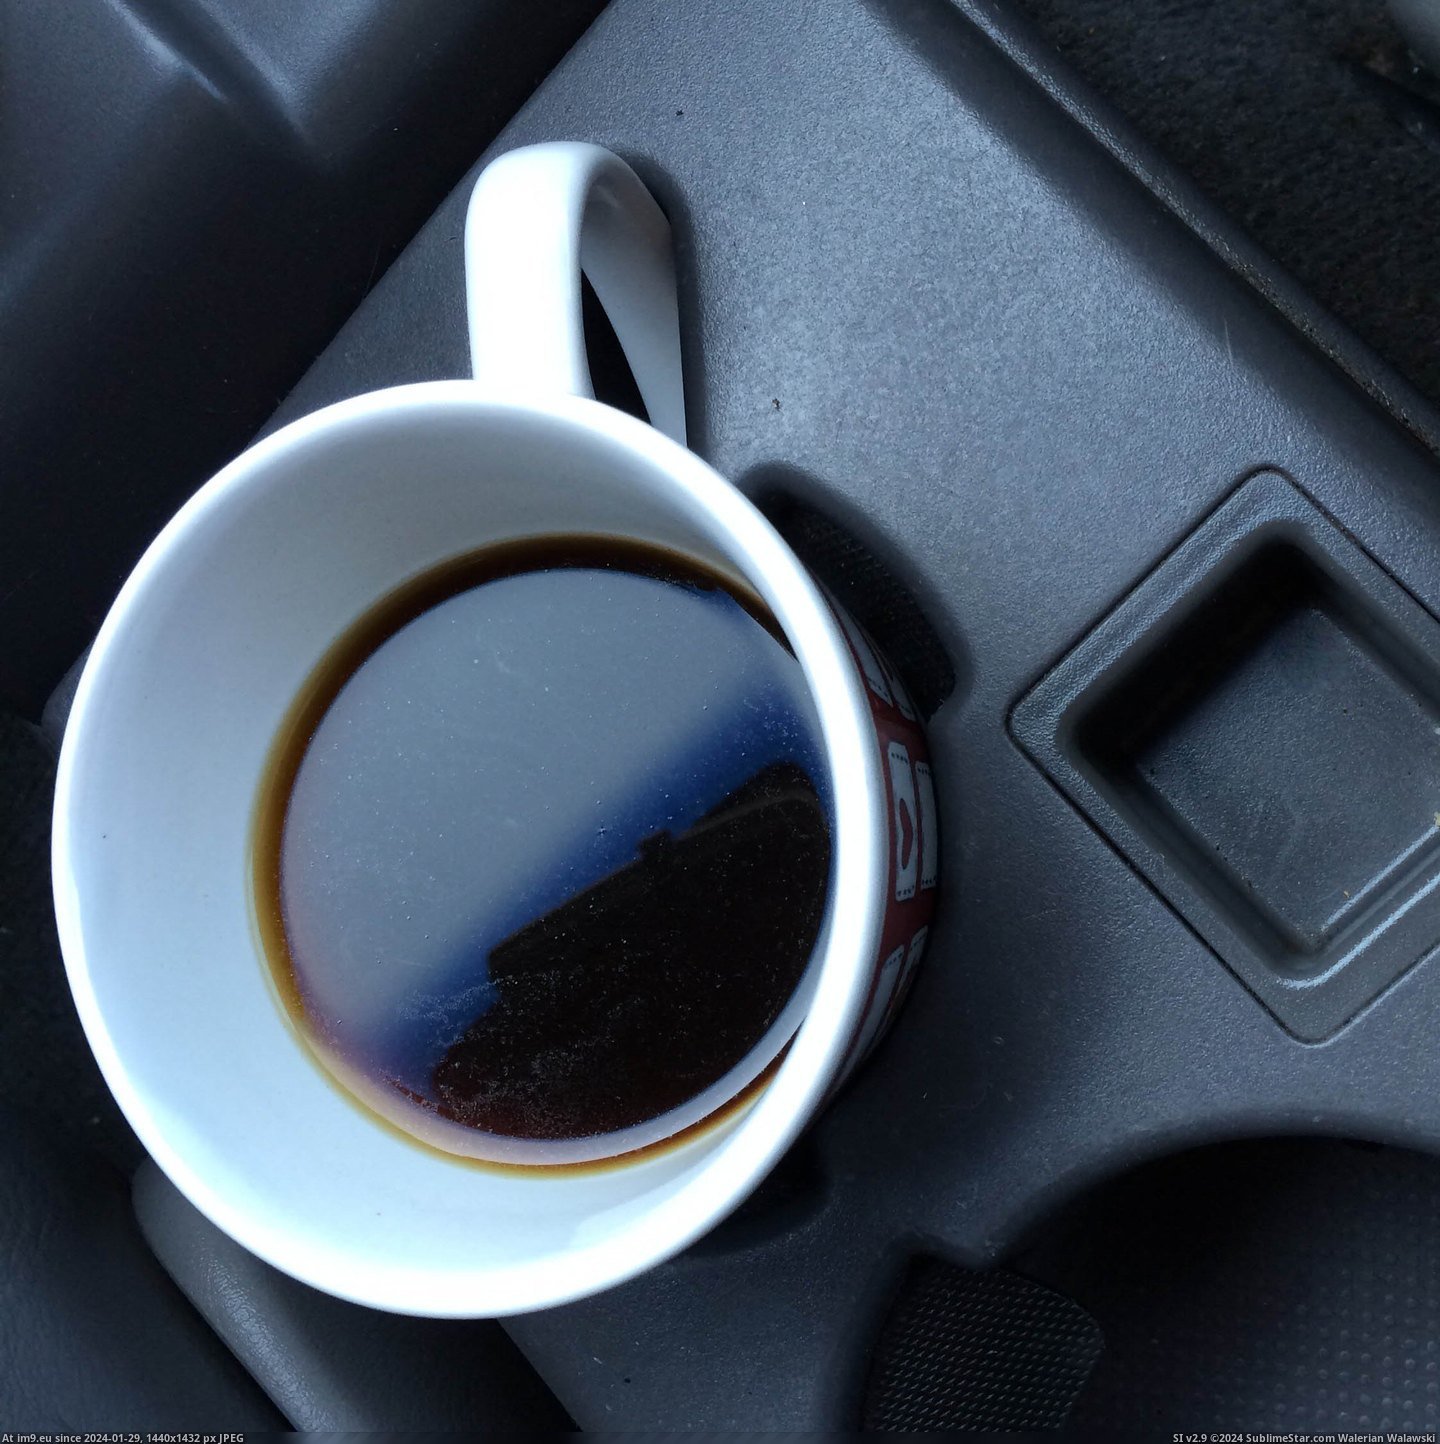 #Cup #Truck #Handles #Holders #Designed #Mug [Mildlyinteresting] The cup holders in my truck appear to be designed for mug handles. Pic. (Изображение из альбом My r/MILDLYINTERESTING favs))